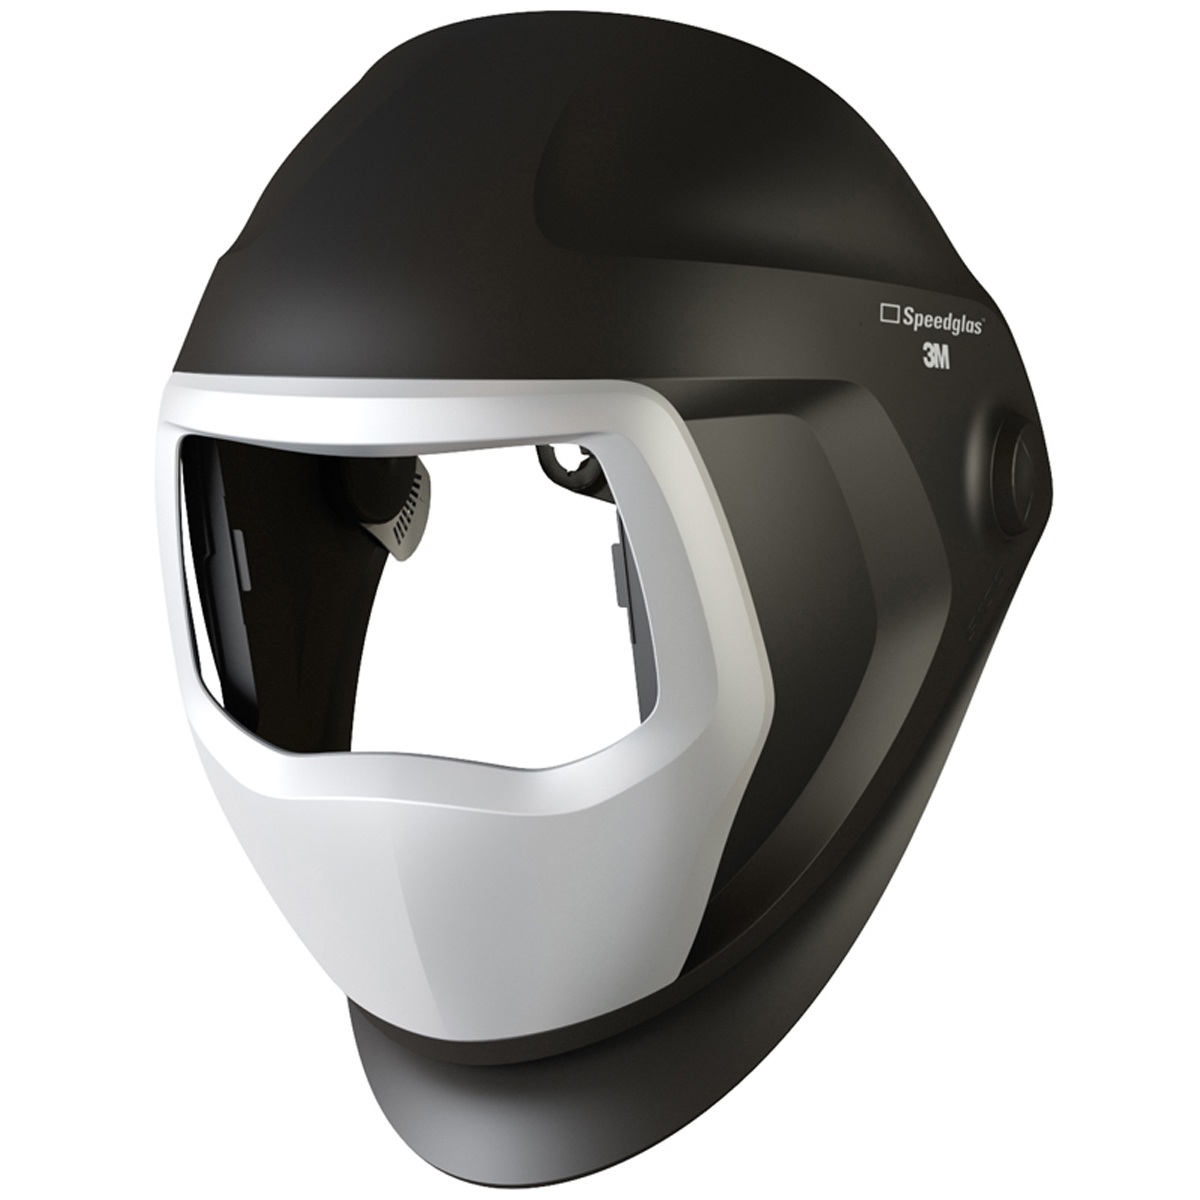 3M™ Black Speedglas™ Helmet Shell For 9100 Series Welding Helmet With Side Windows And Headband